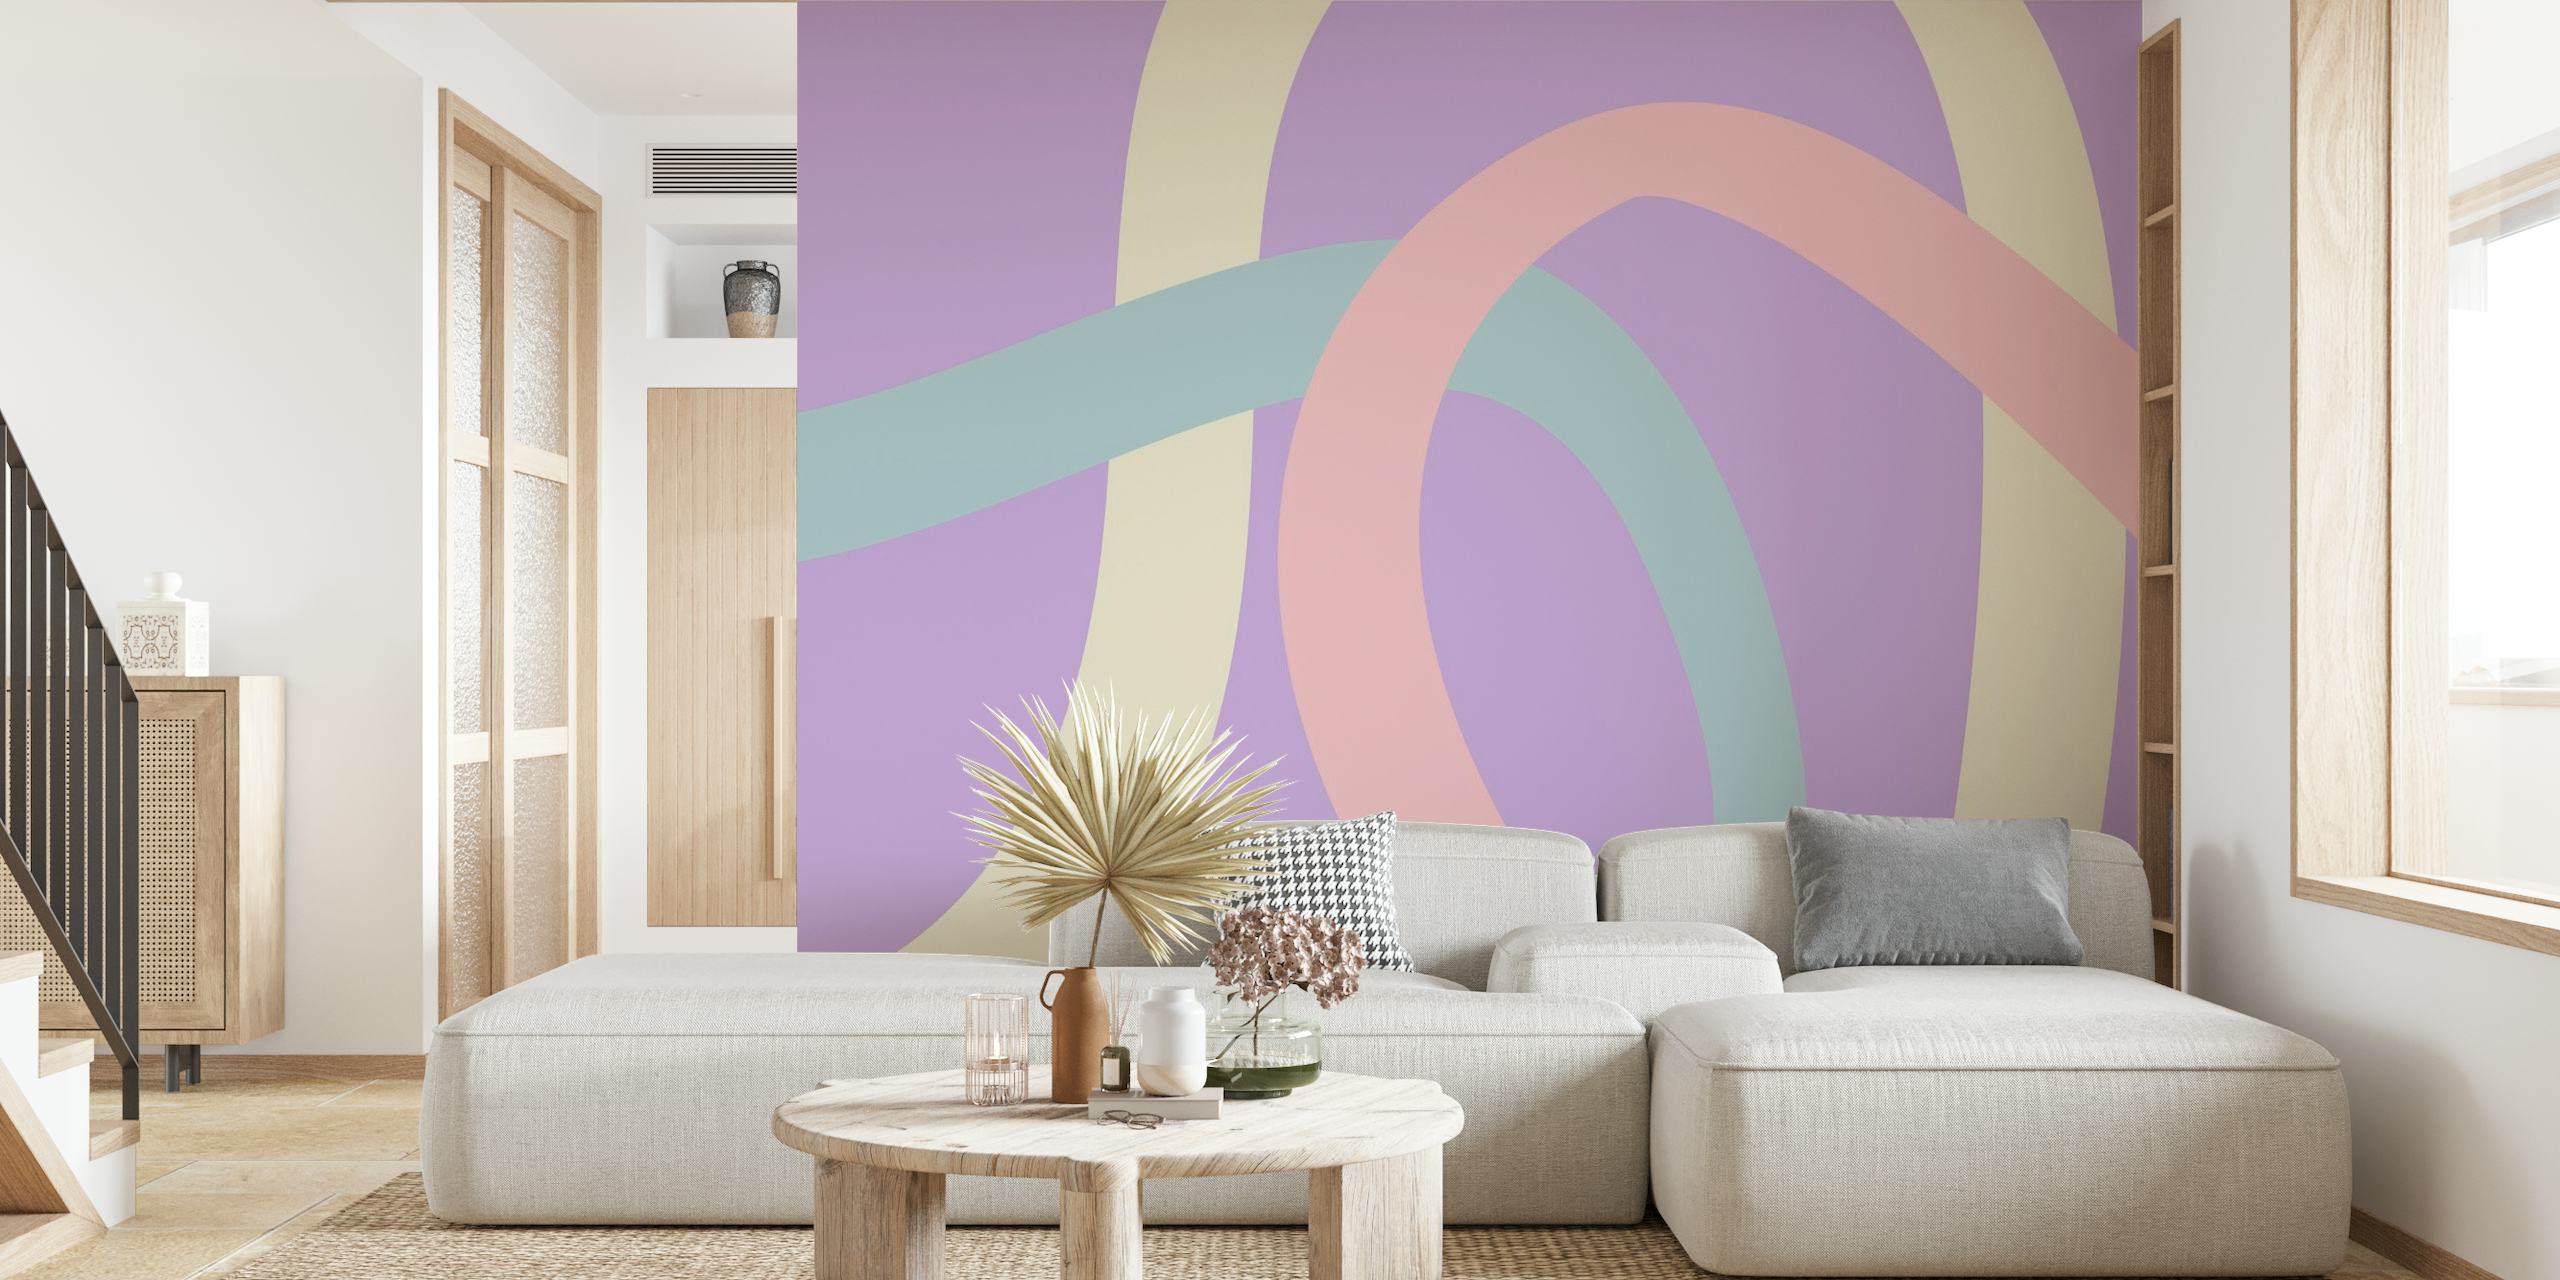 Mural de pared abstracto en colores pastel con influencias de diseño moderno de mediados de siglo